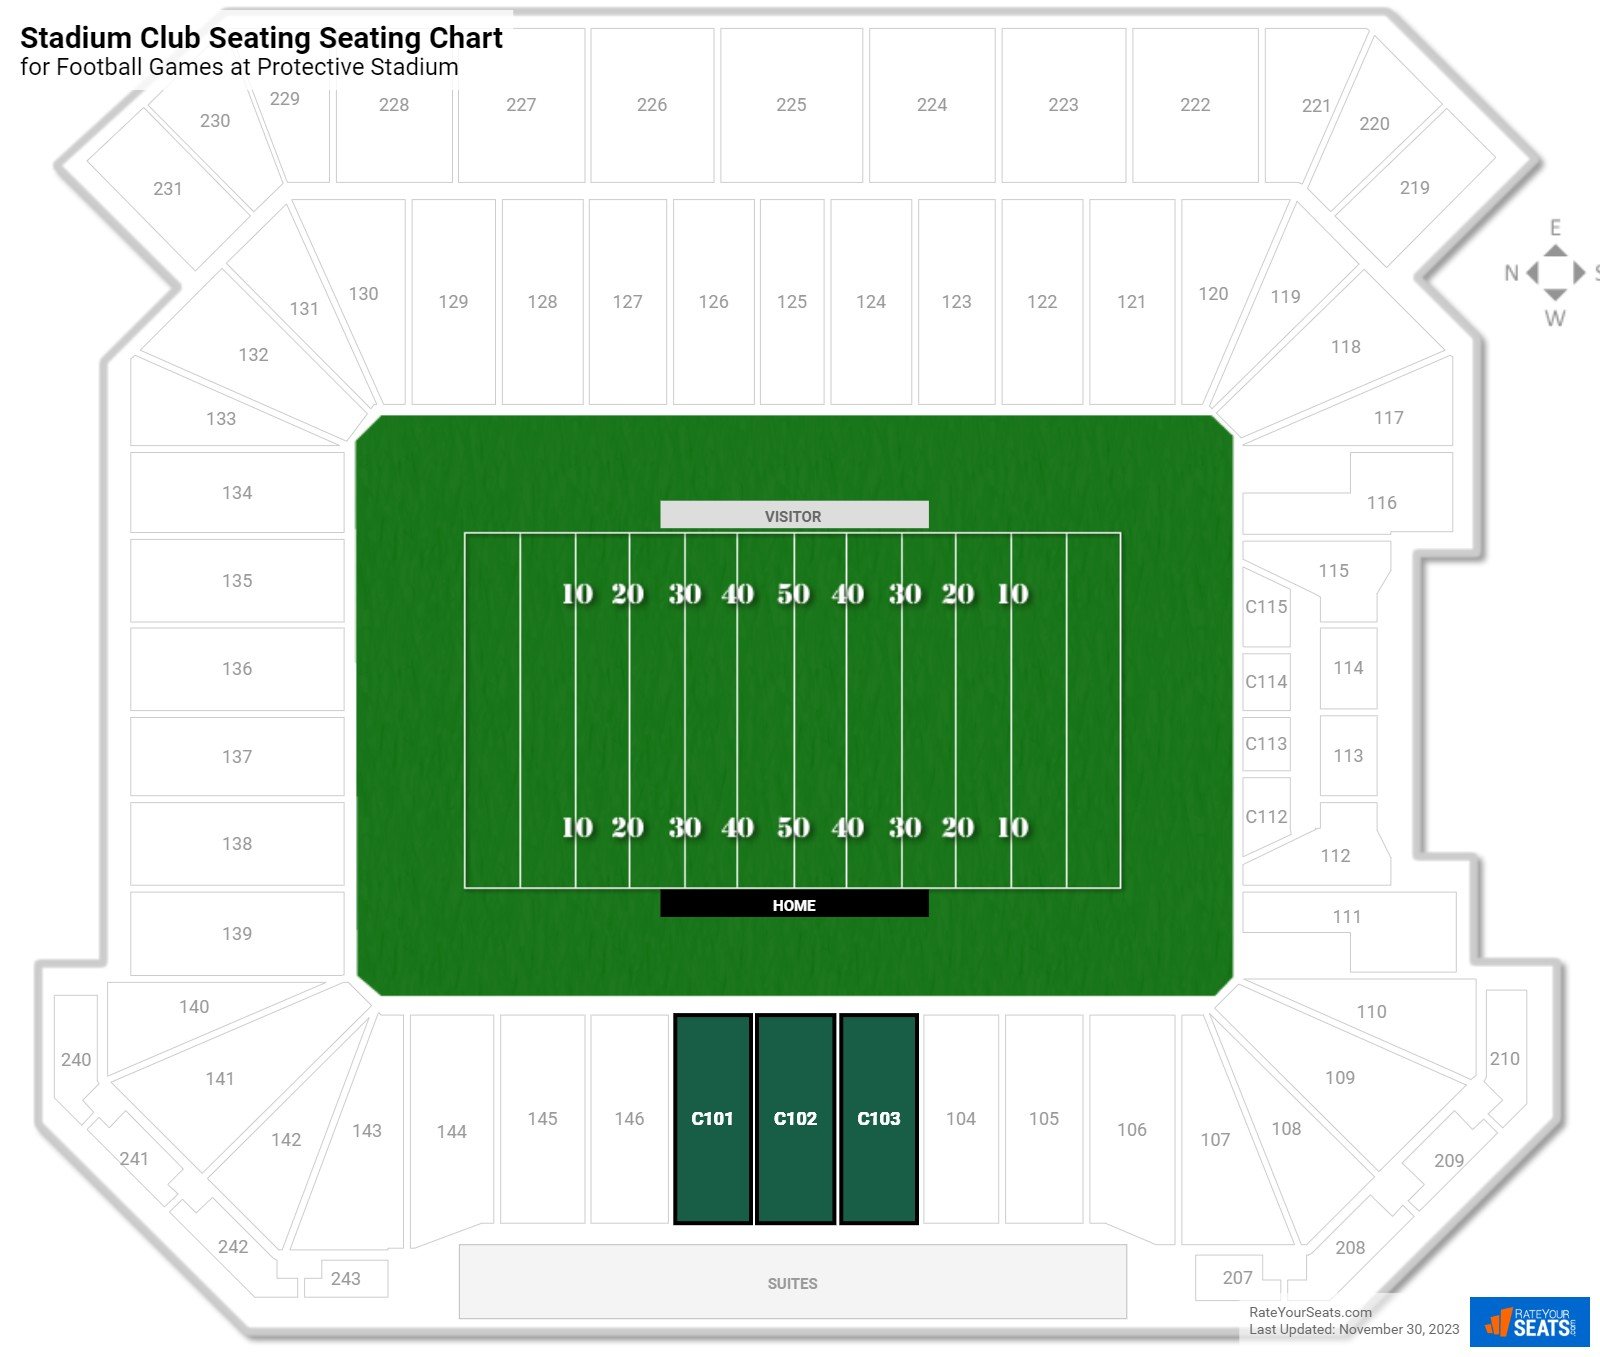 Football Stadium Club Seating Seating Chart at Protective Stadium. click .....